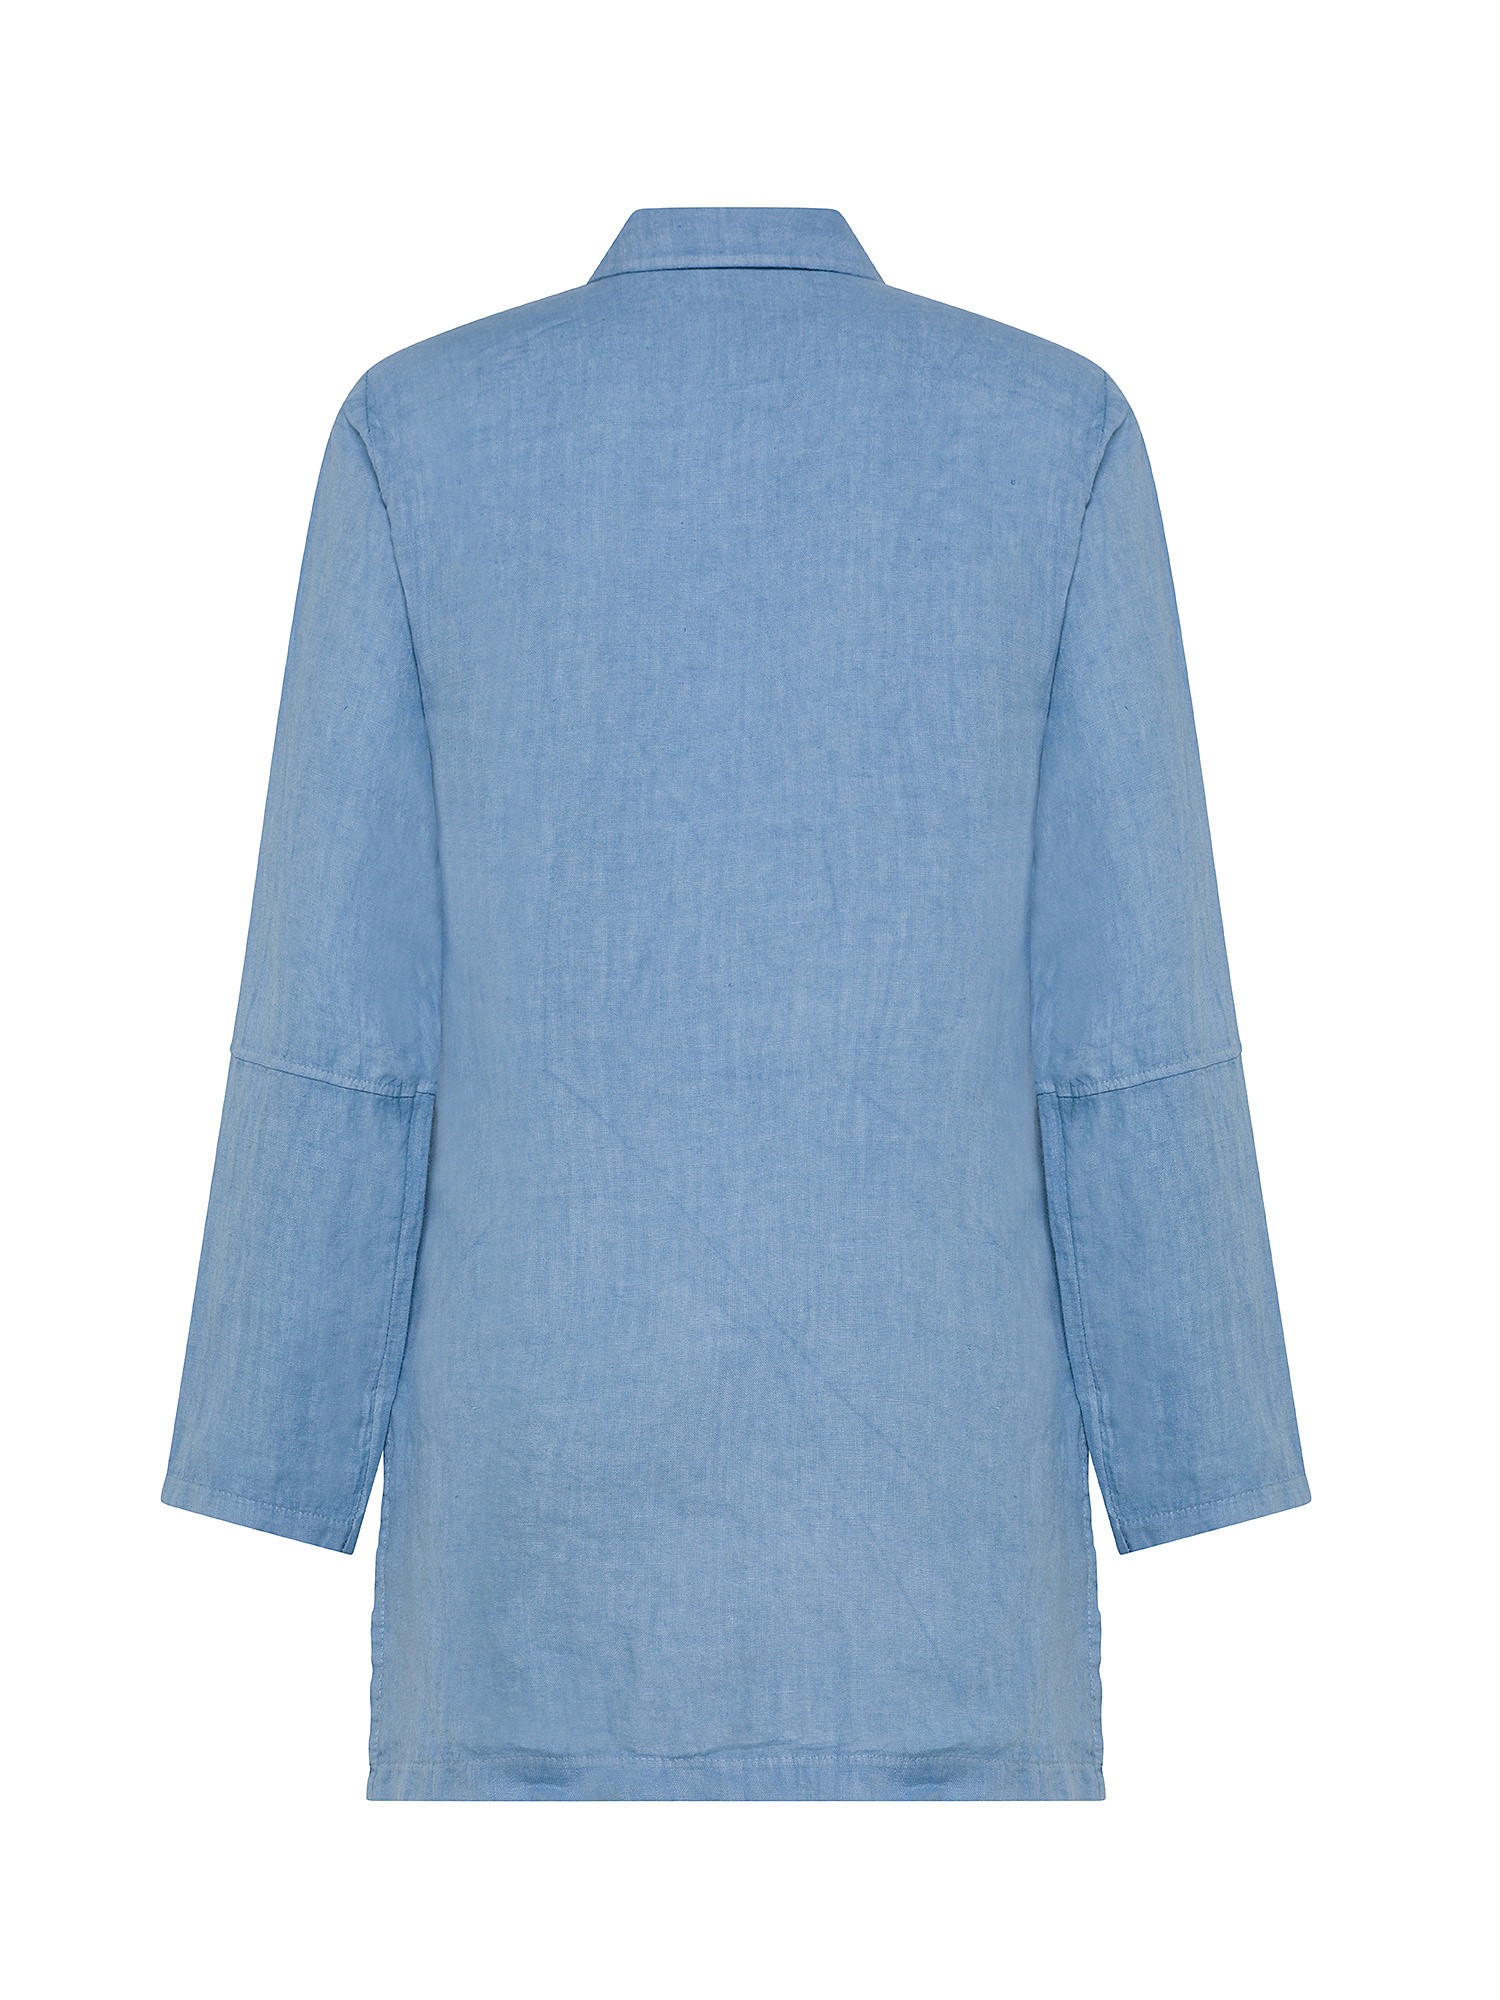 Koan - Long linen shirt, Denim, large image number 1